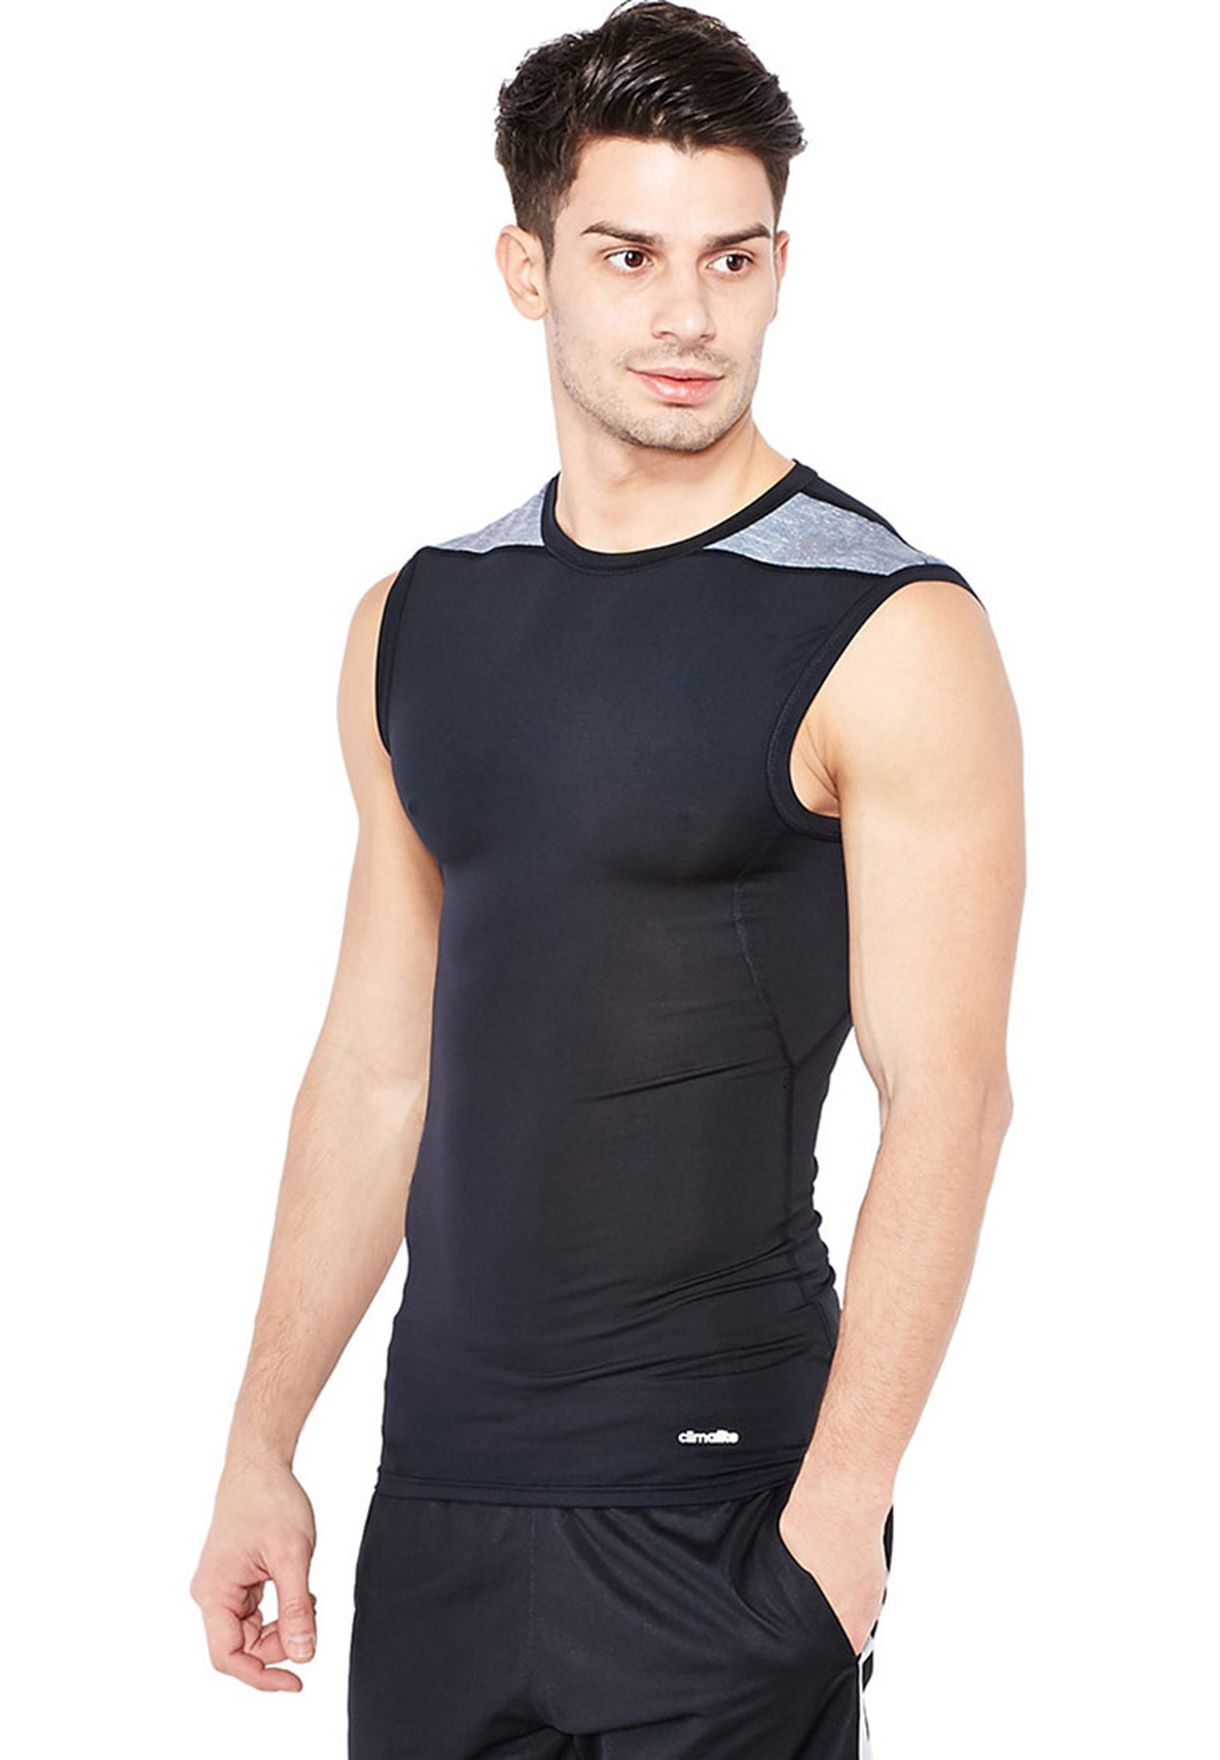 adidas Men's Tech Fit Base Sleeveless Shirt, Black/Grey, 2XL | eBay